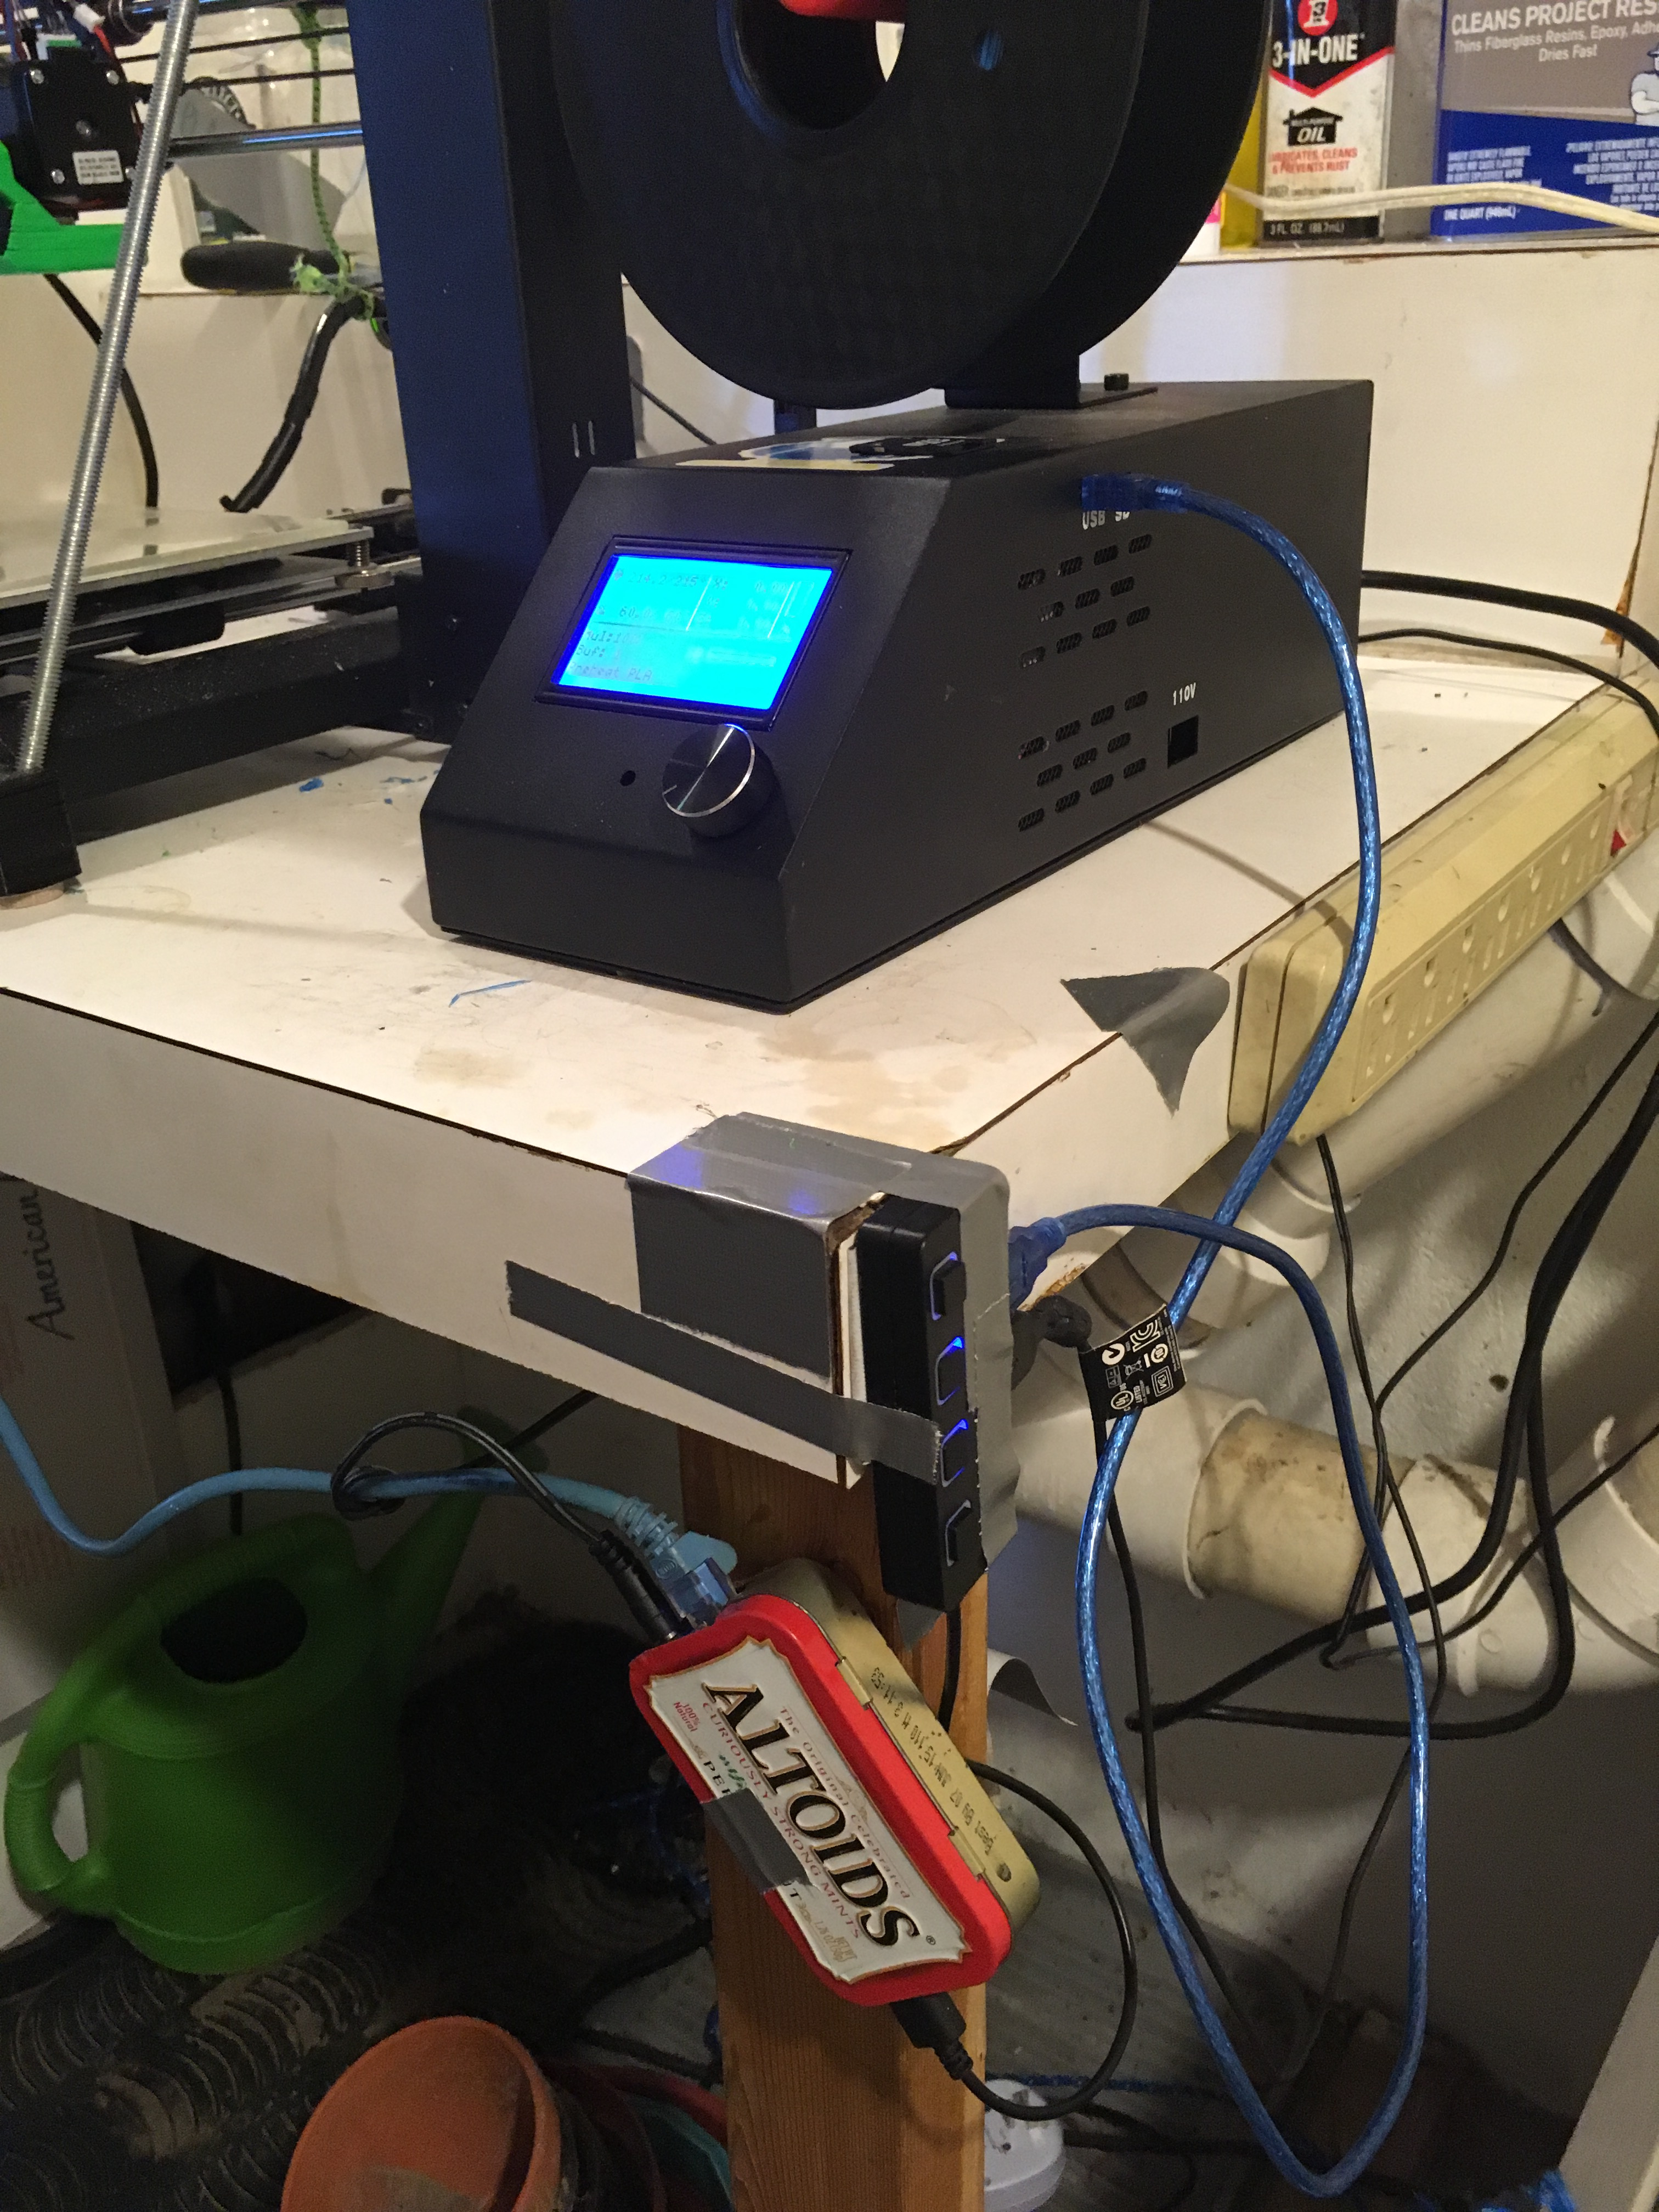 Beaglebone and printer control box